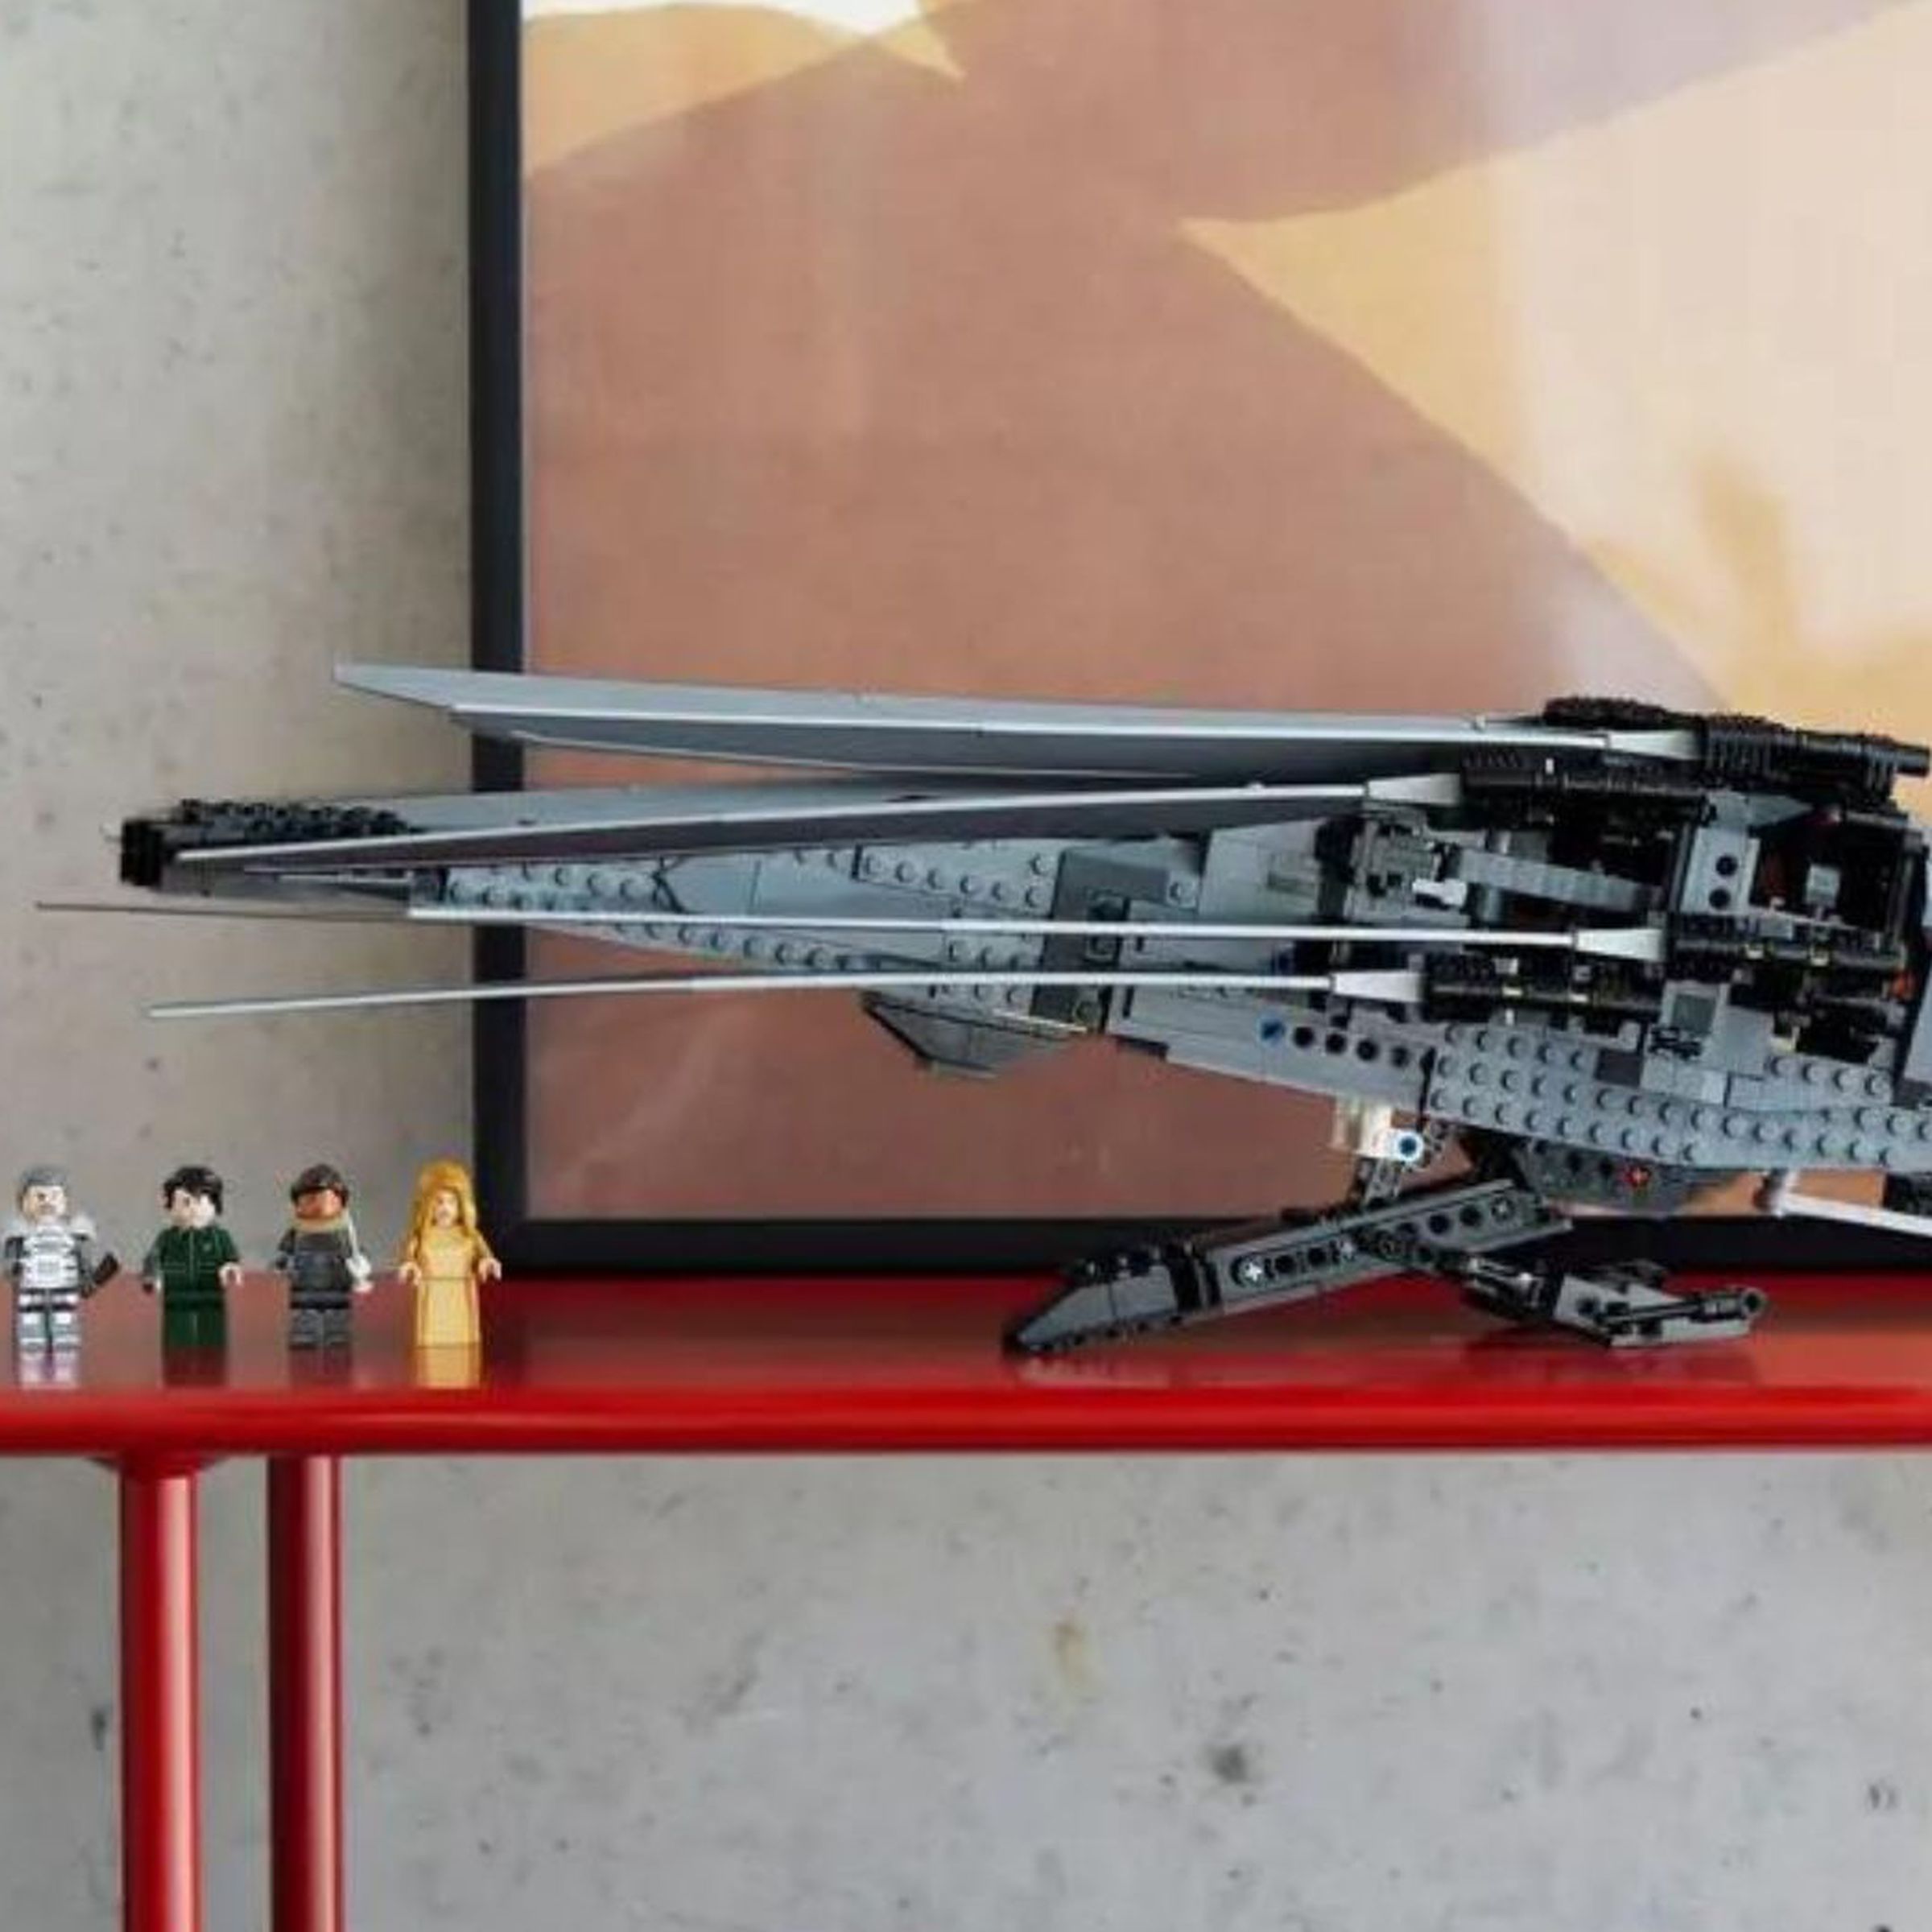 The Dune Atreides Royal Ornithopter Lego set on a shelf beside its eight character mini figurines.